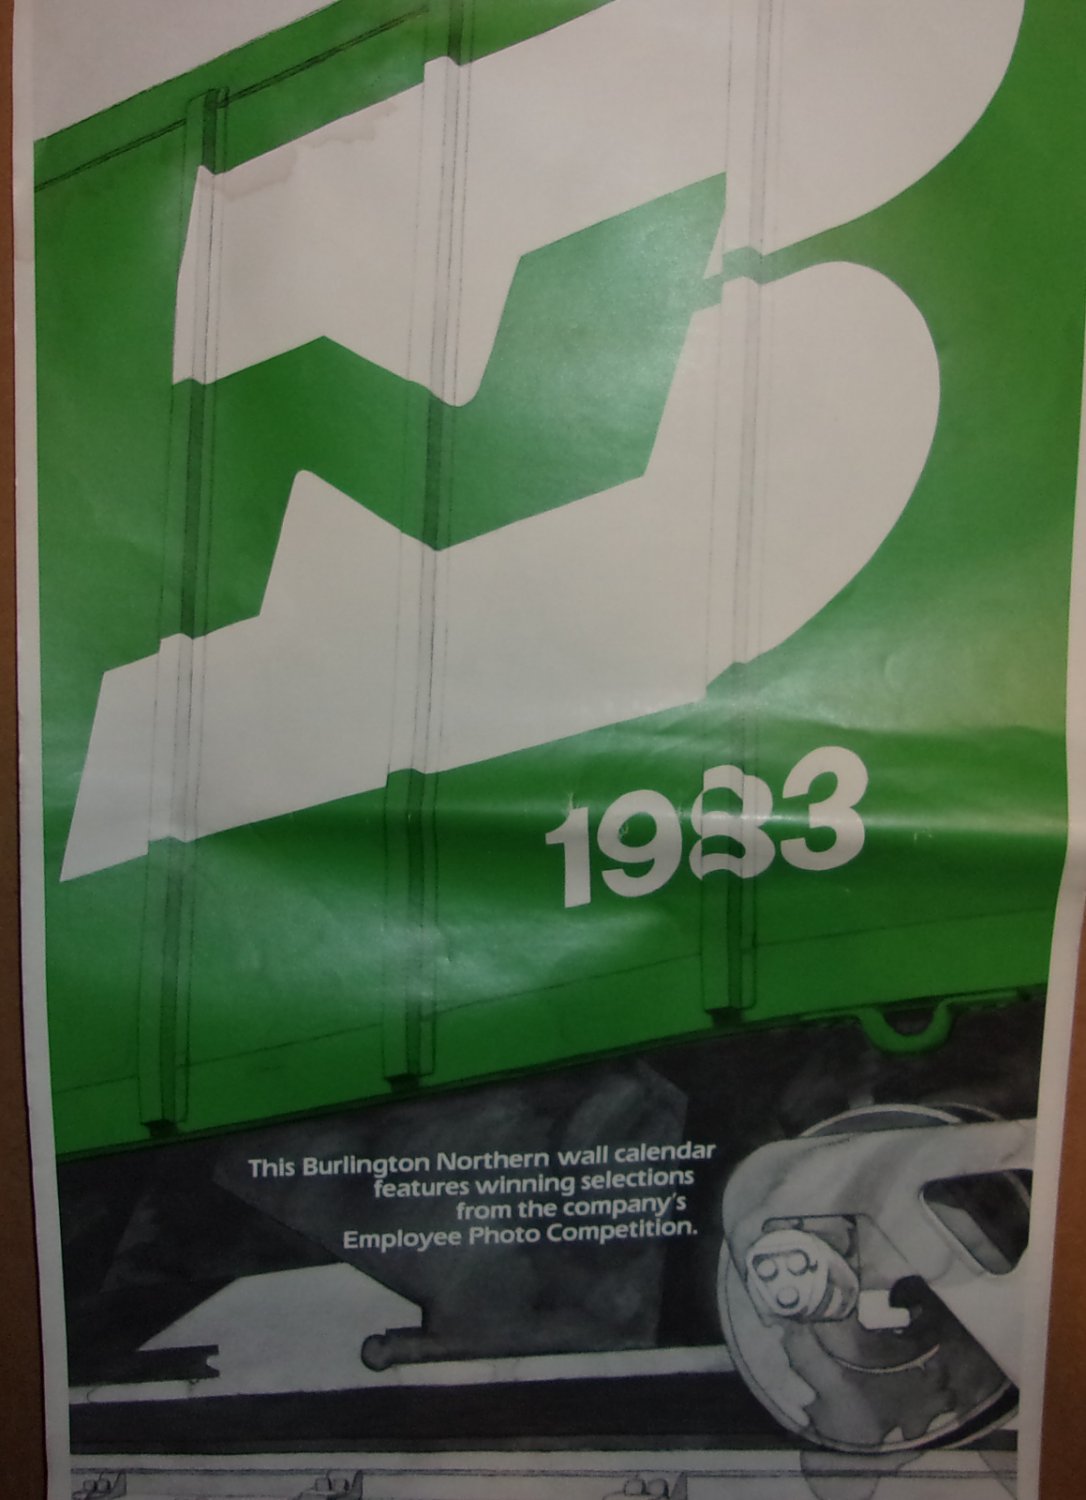 Burlington Northern Wall Calendar 1983 features winning selections